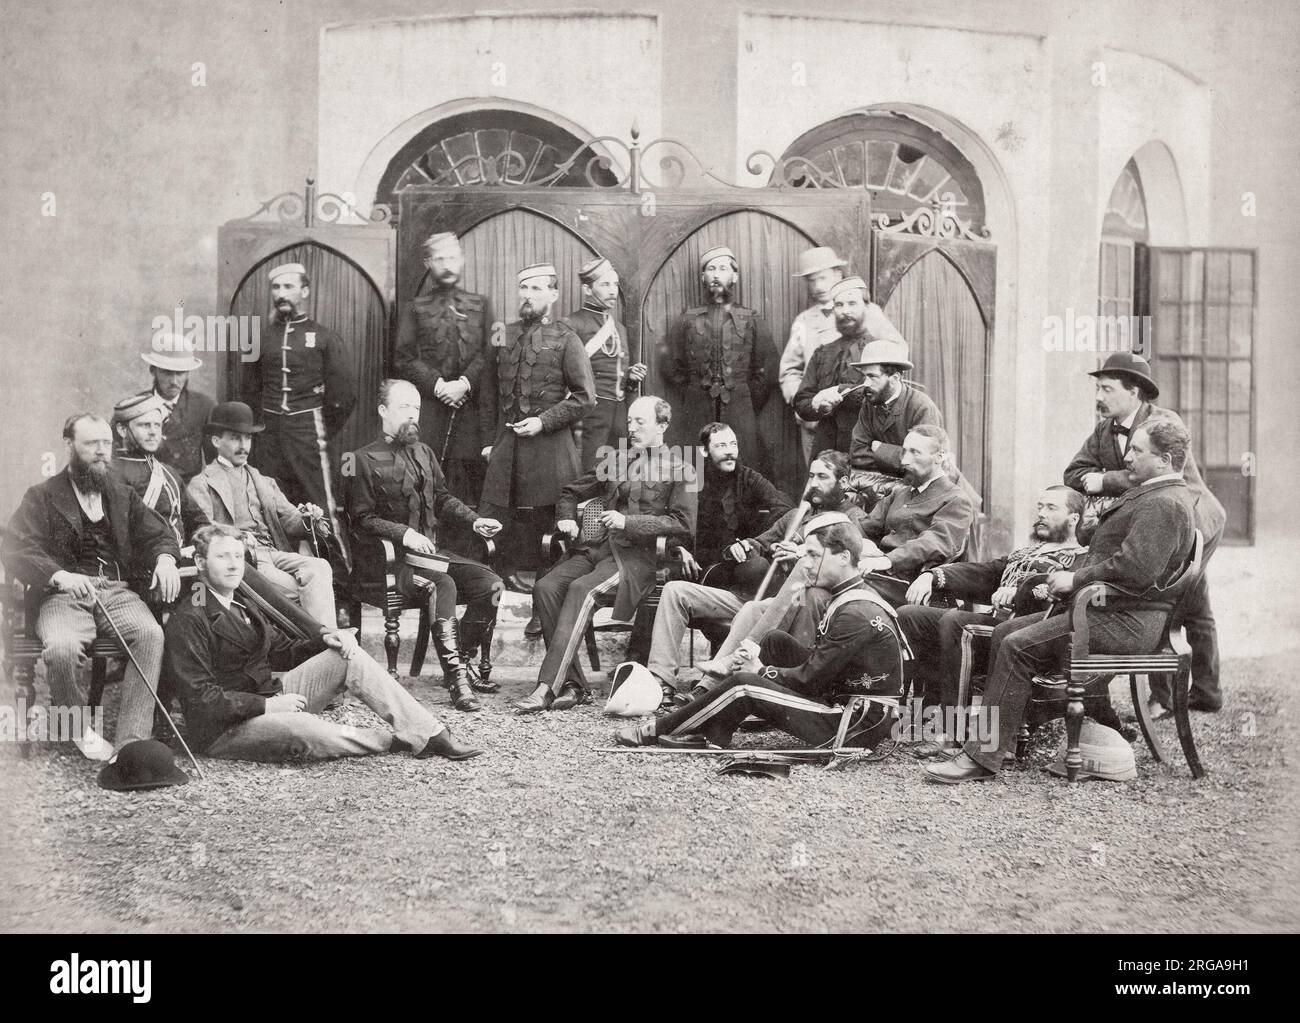 Vintage 19. Jahrhundert Fotografie - Britische Armee in Indien - Offiziere der 4. Husaren, 1869 Stockfoto